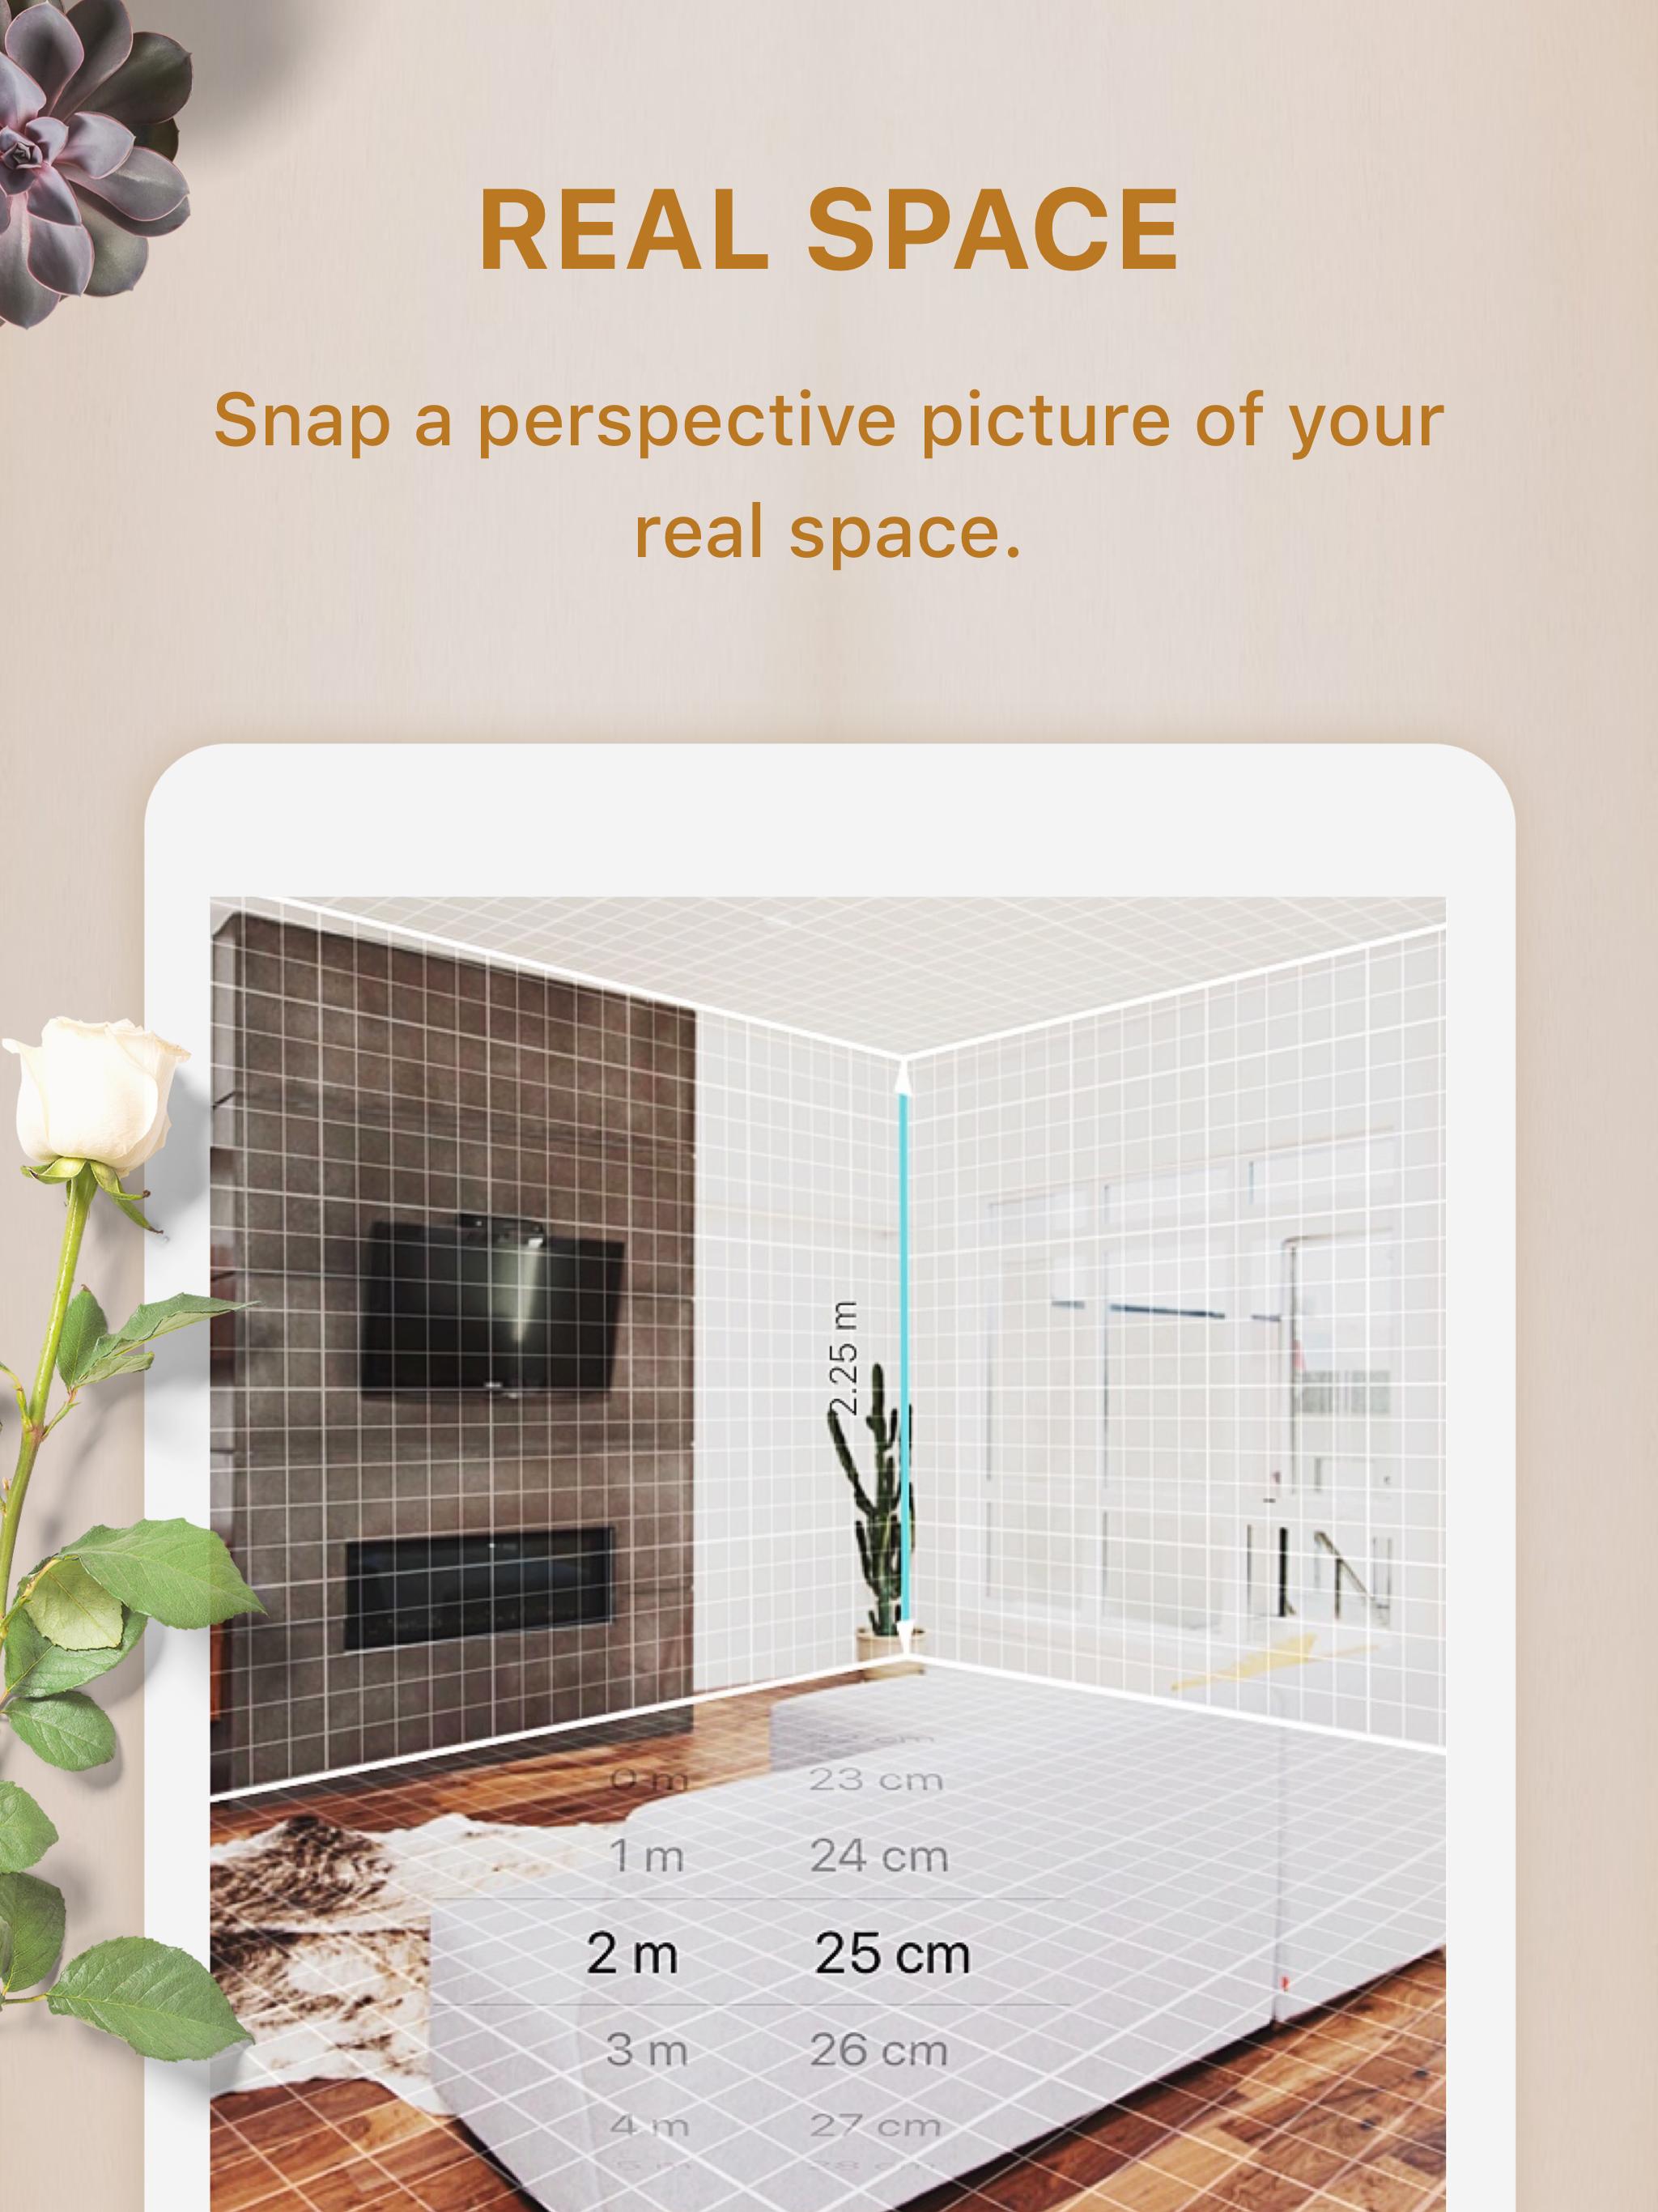 Homestyler Interior Design & Decorating Ideas 4.0.0 Screenshot 11